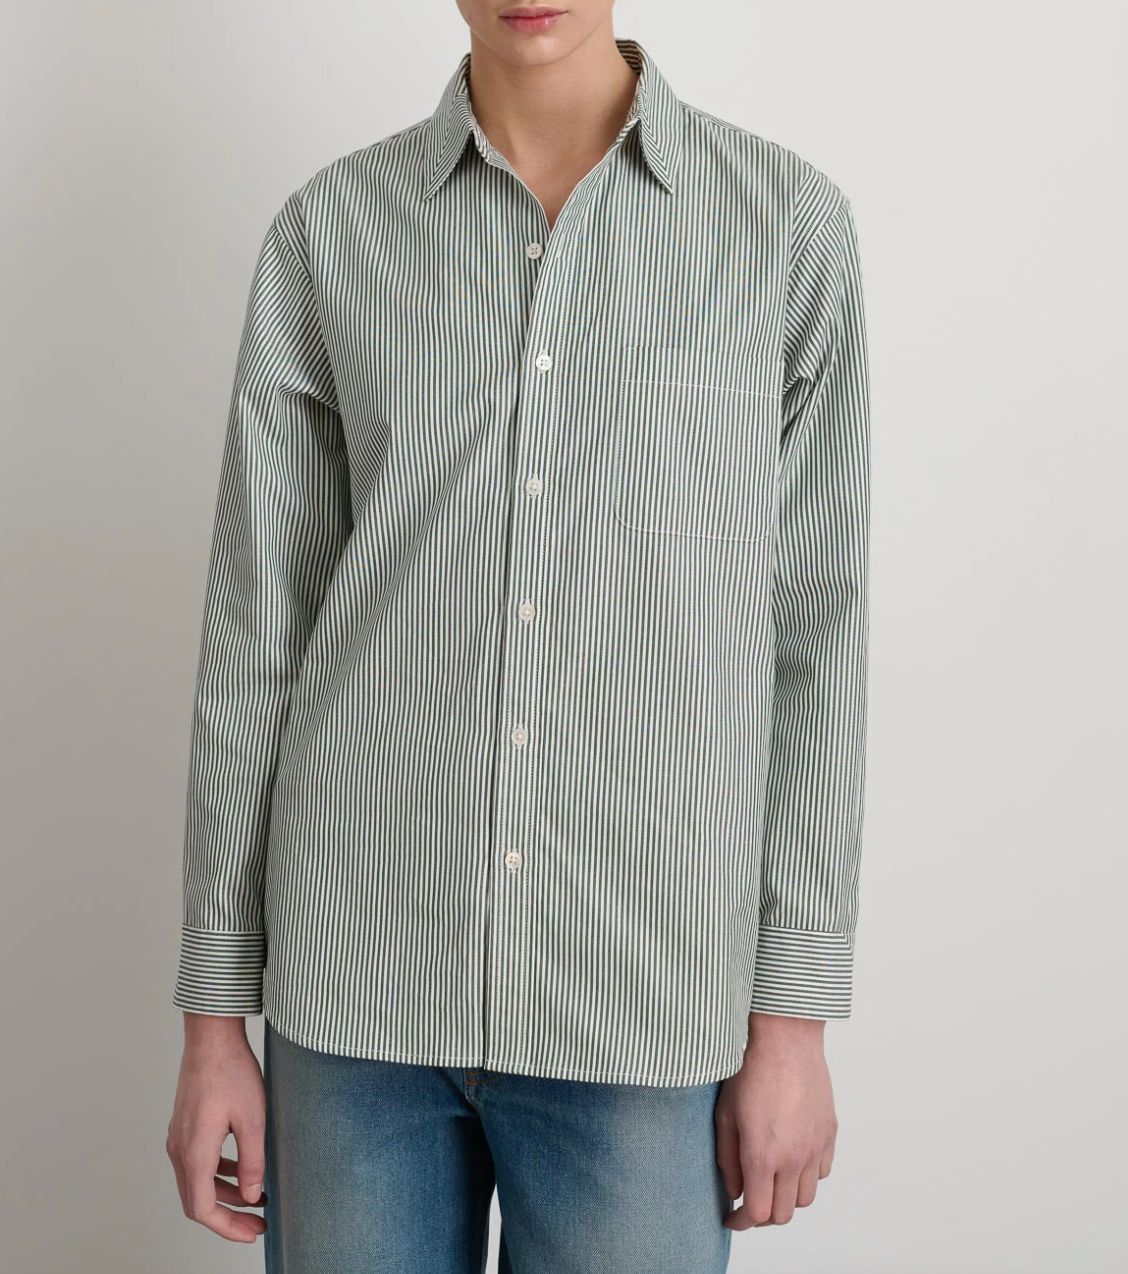 Product Image for Nolan Shirt, Green Yarn Dye Stripe